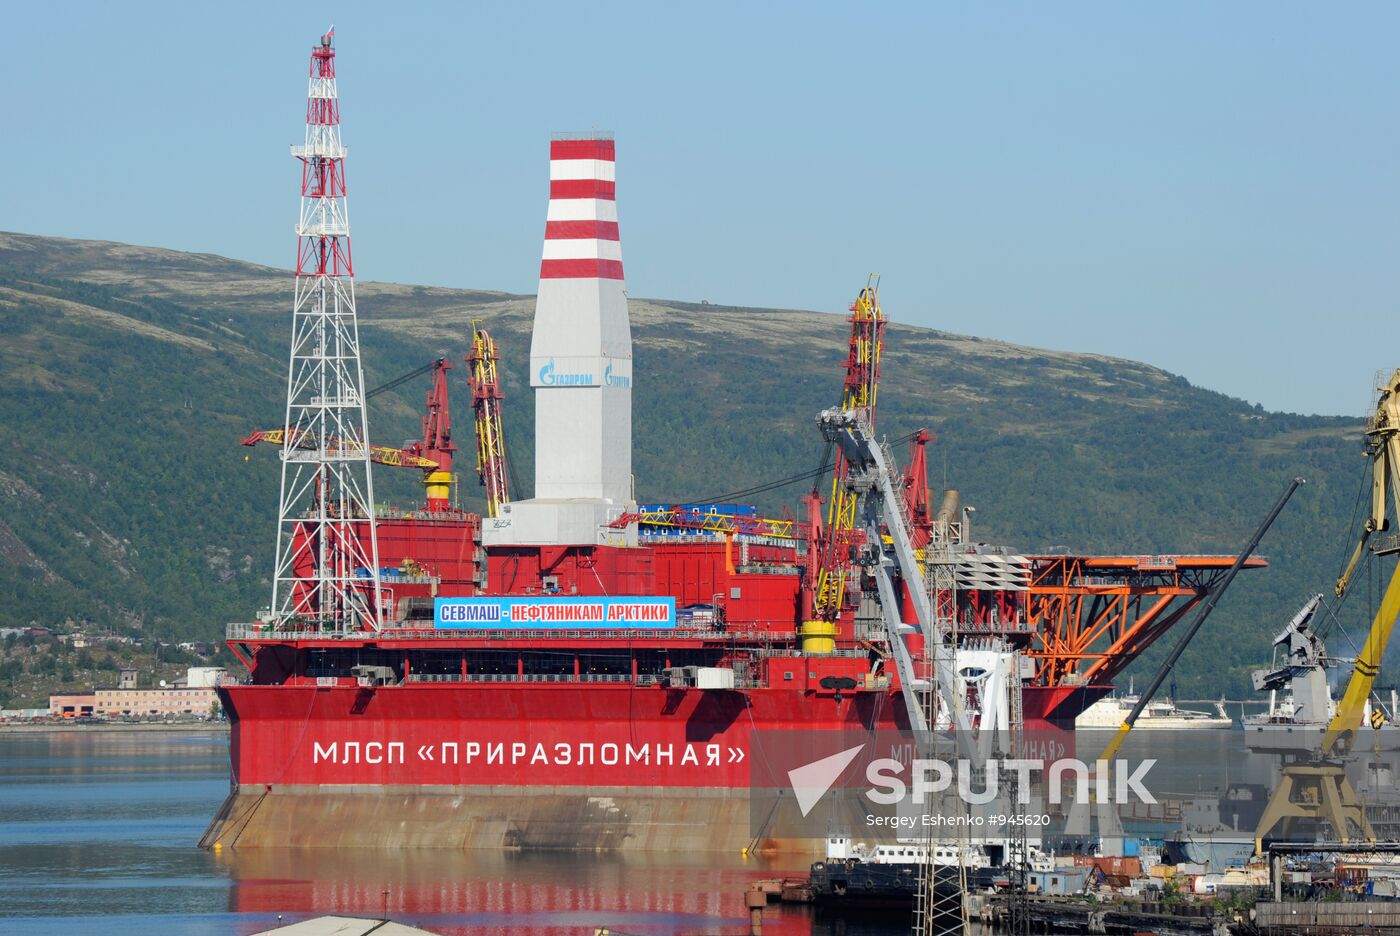 Prirazlomnaya offshore ice-resistant fixed platform